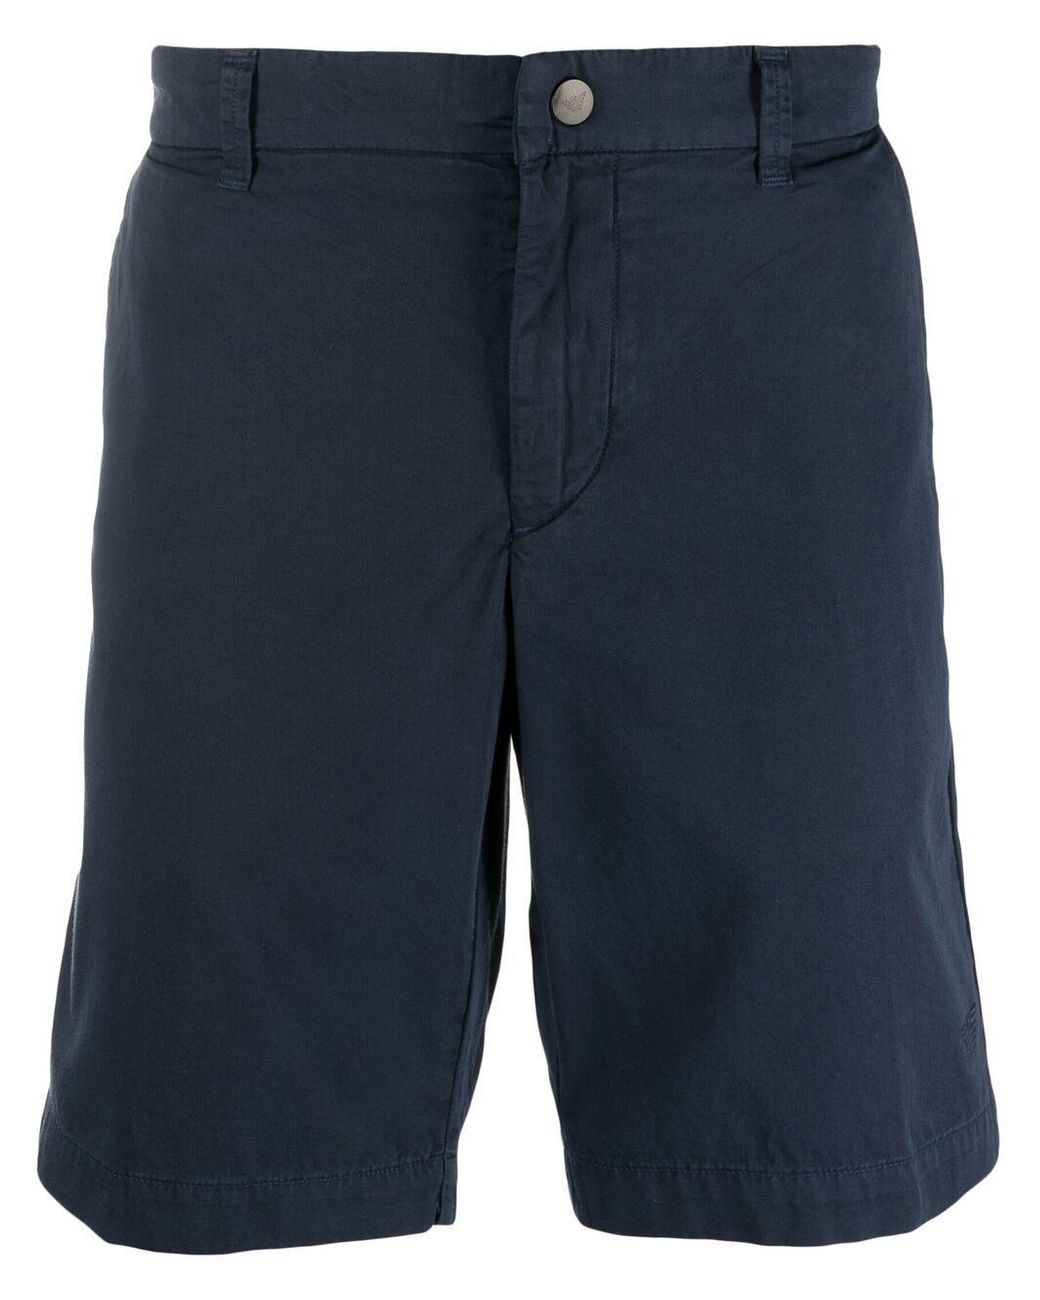 Emporio Armani Cotton Shorts Blue for Men - Lyst